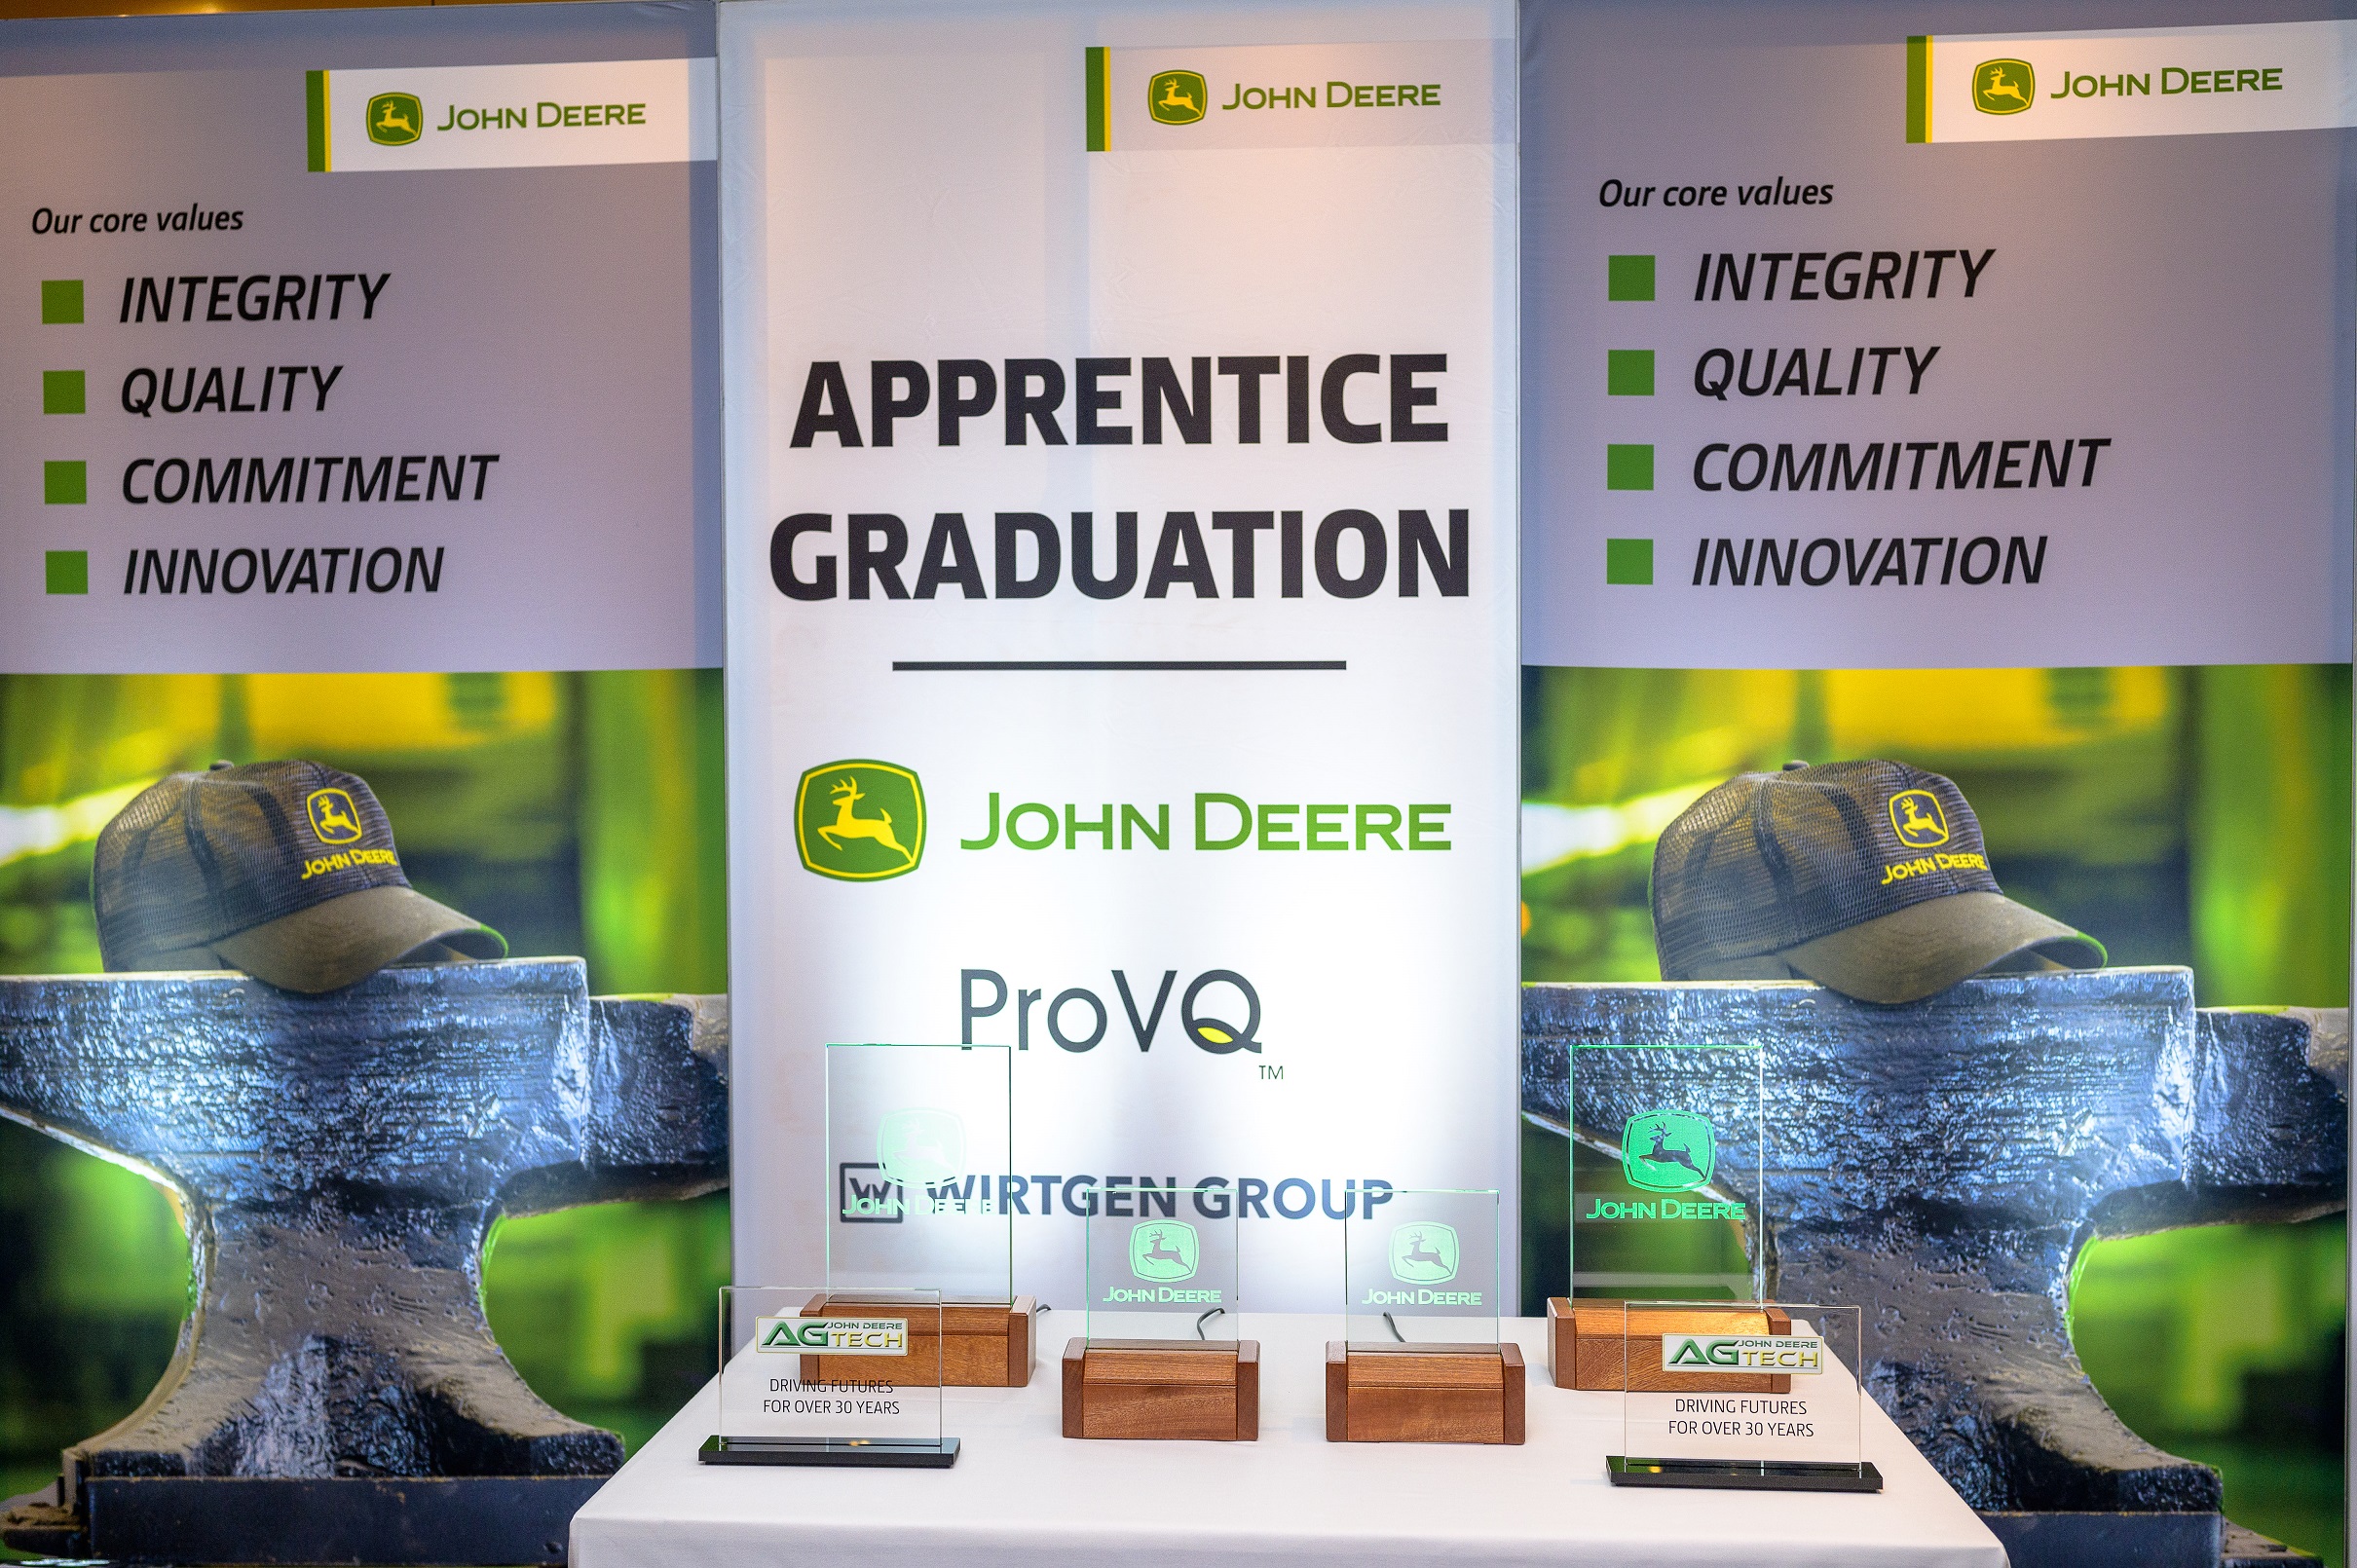 John Deere Apprentice Graduation